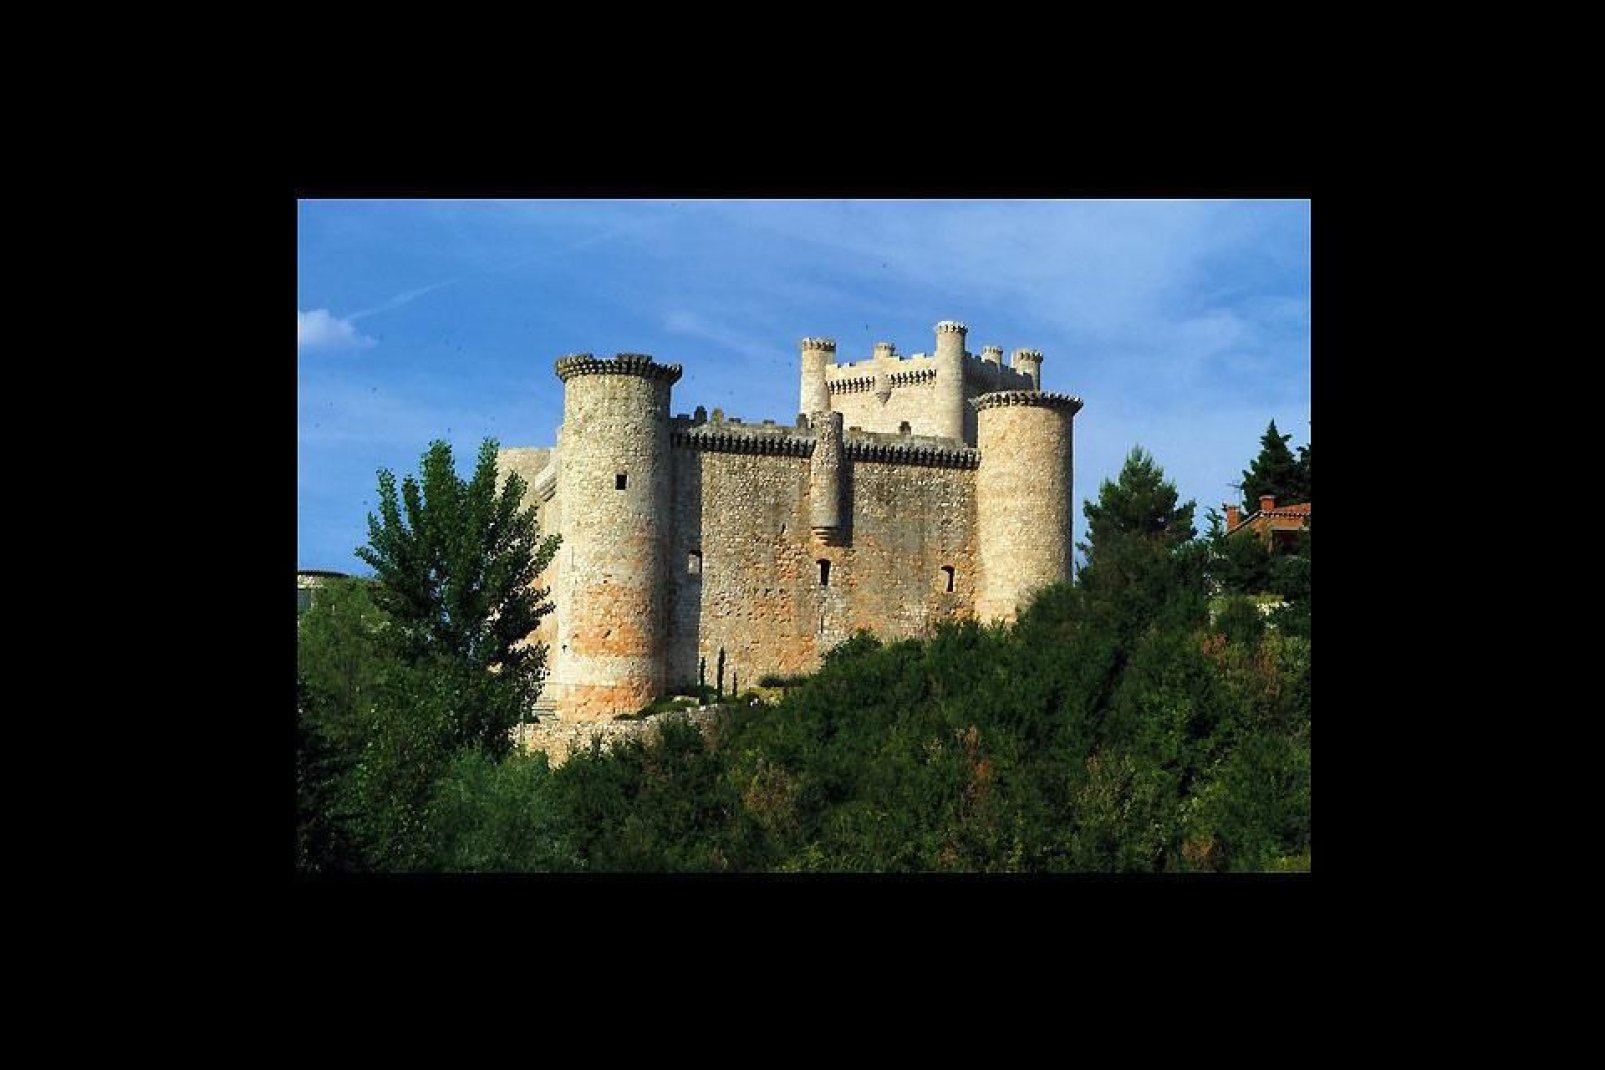 L'une des plus belles villes de Castilla-La Mancha